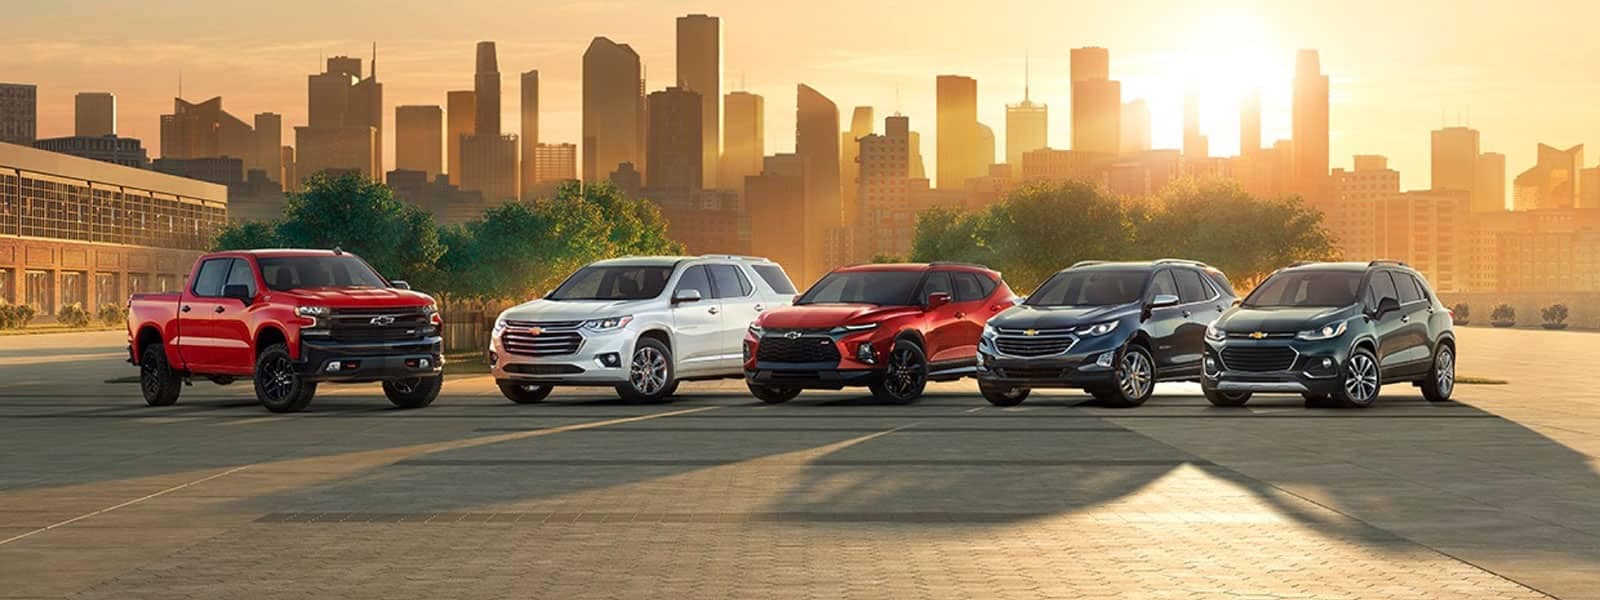 The Best Used General Motors SUVs to Buy in Victoria, TX